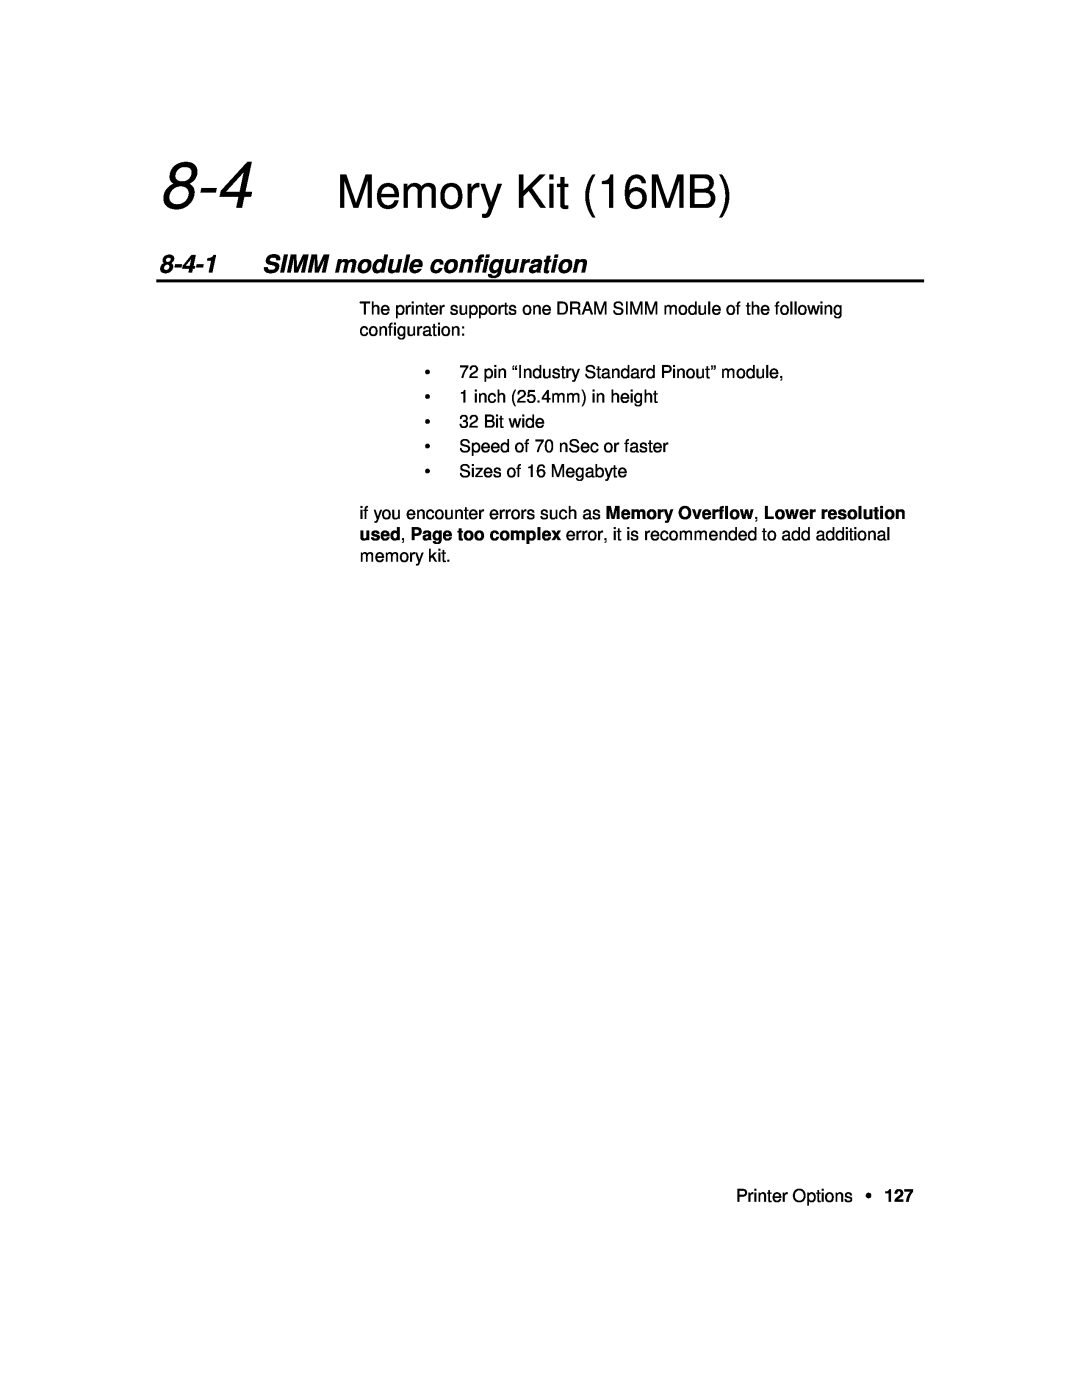 Xerox P12 manual Memory Kit 16MB, SIMM module configuration 